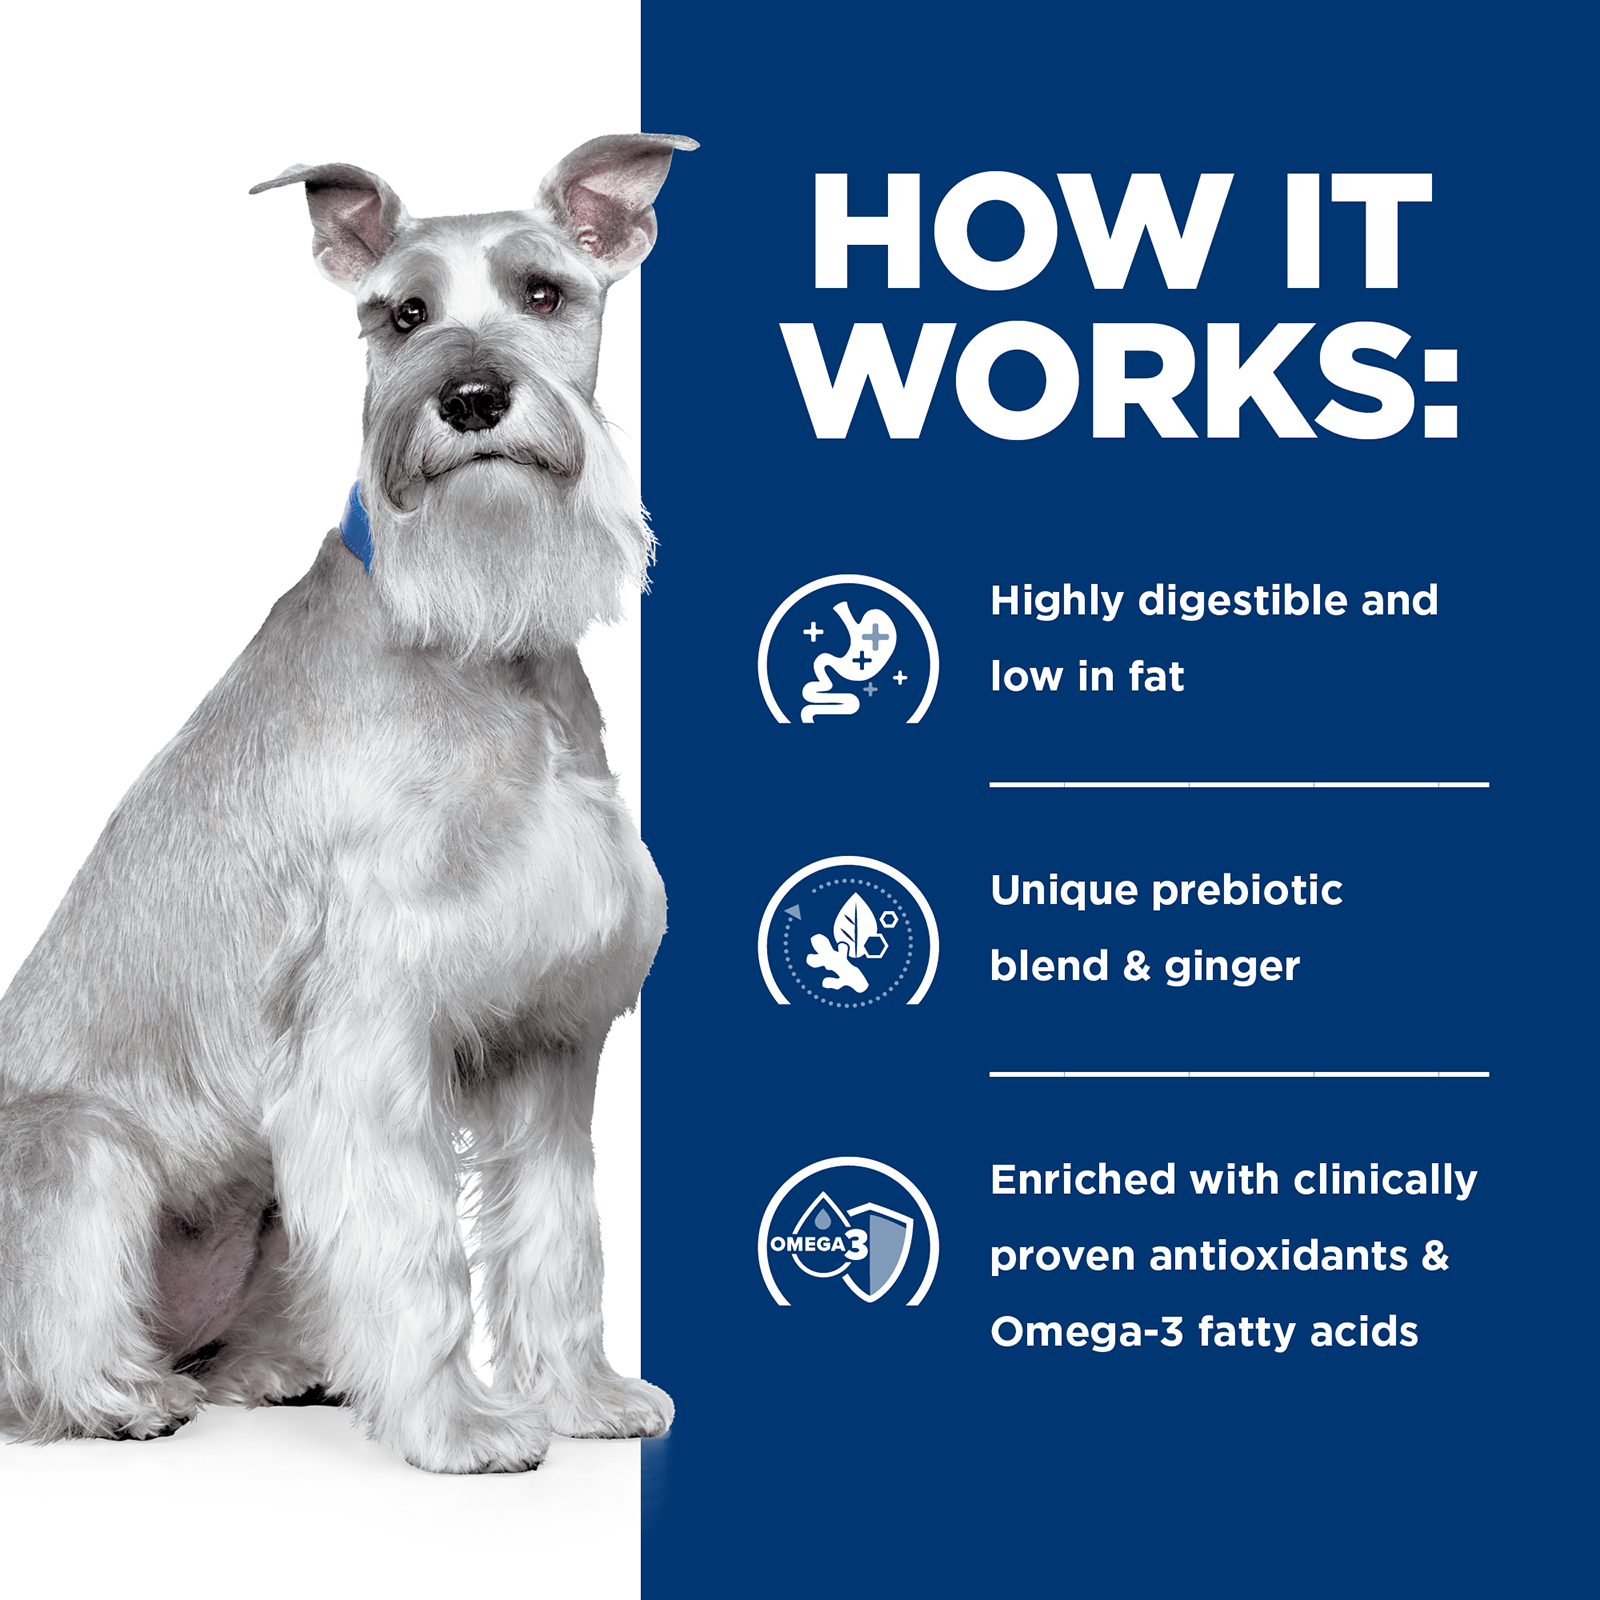 Hill's Prescription Diet Dog Food Can i/d Low Fat Digestive Care